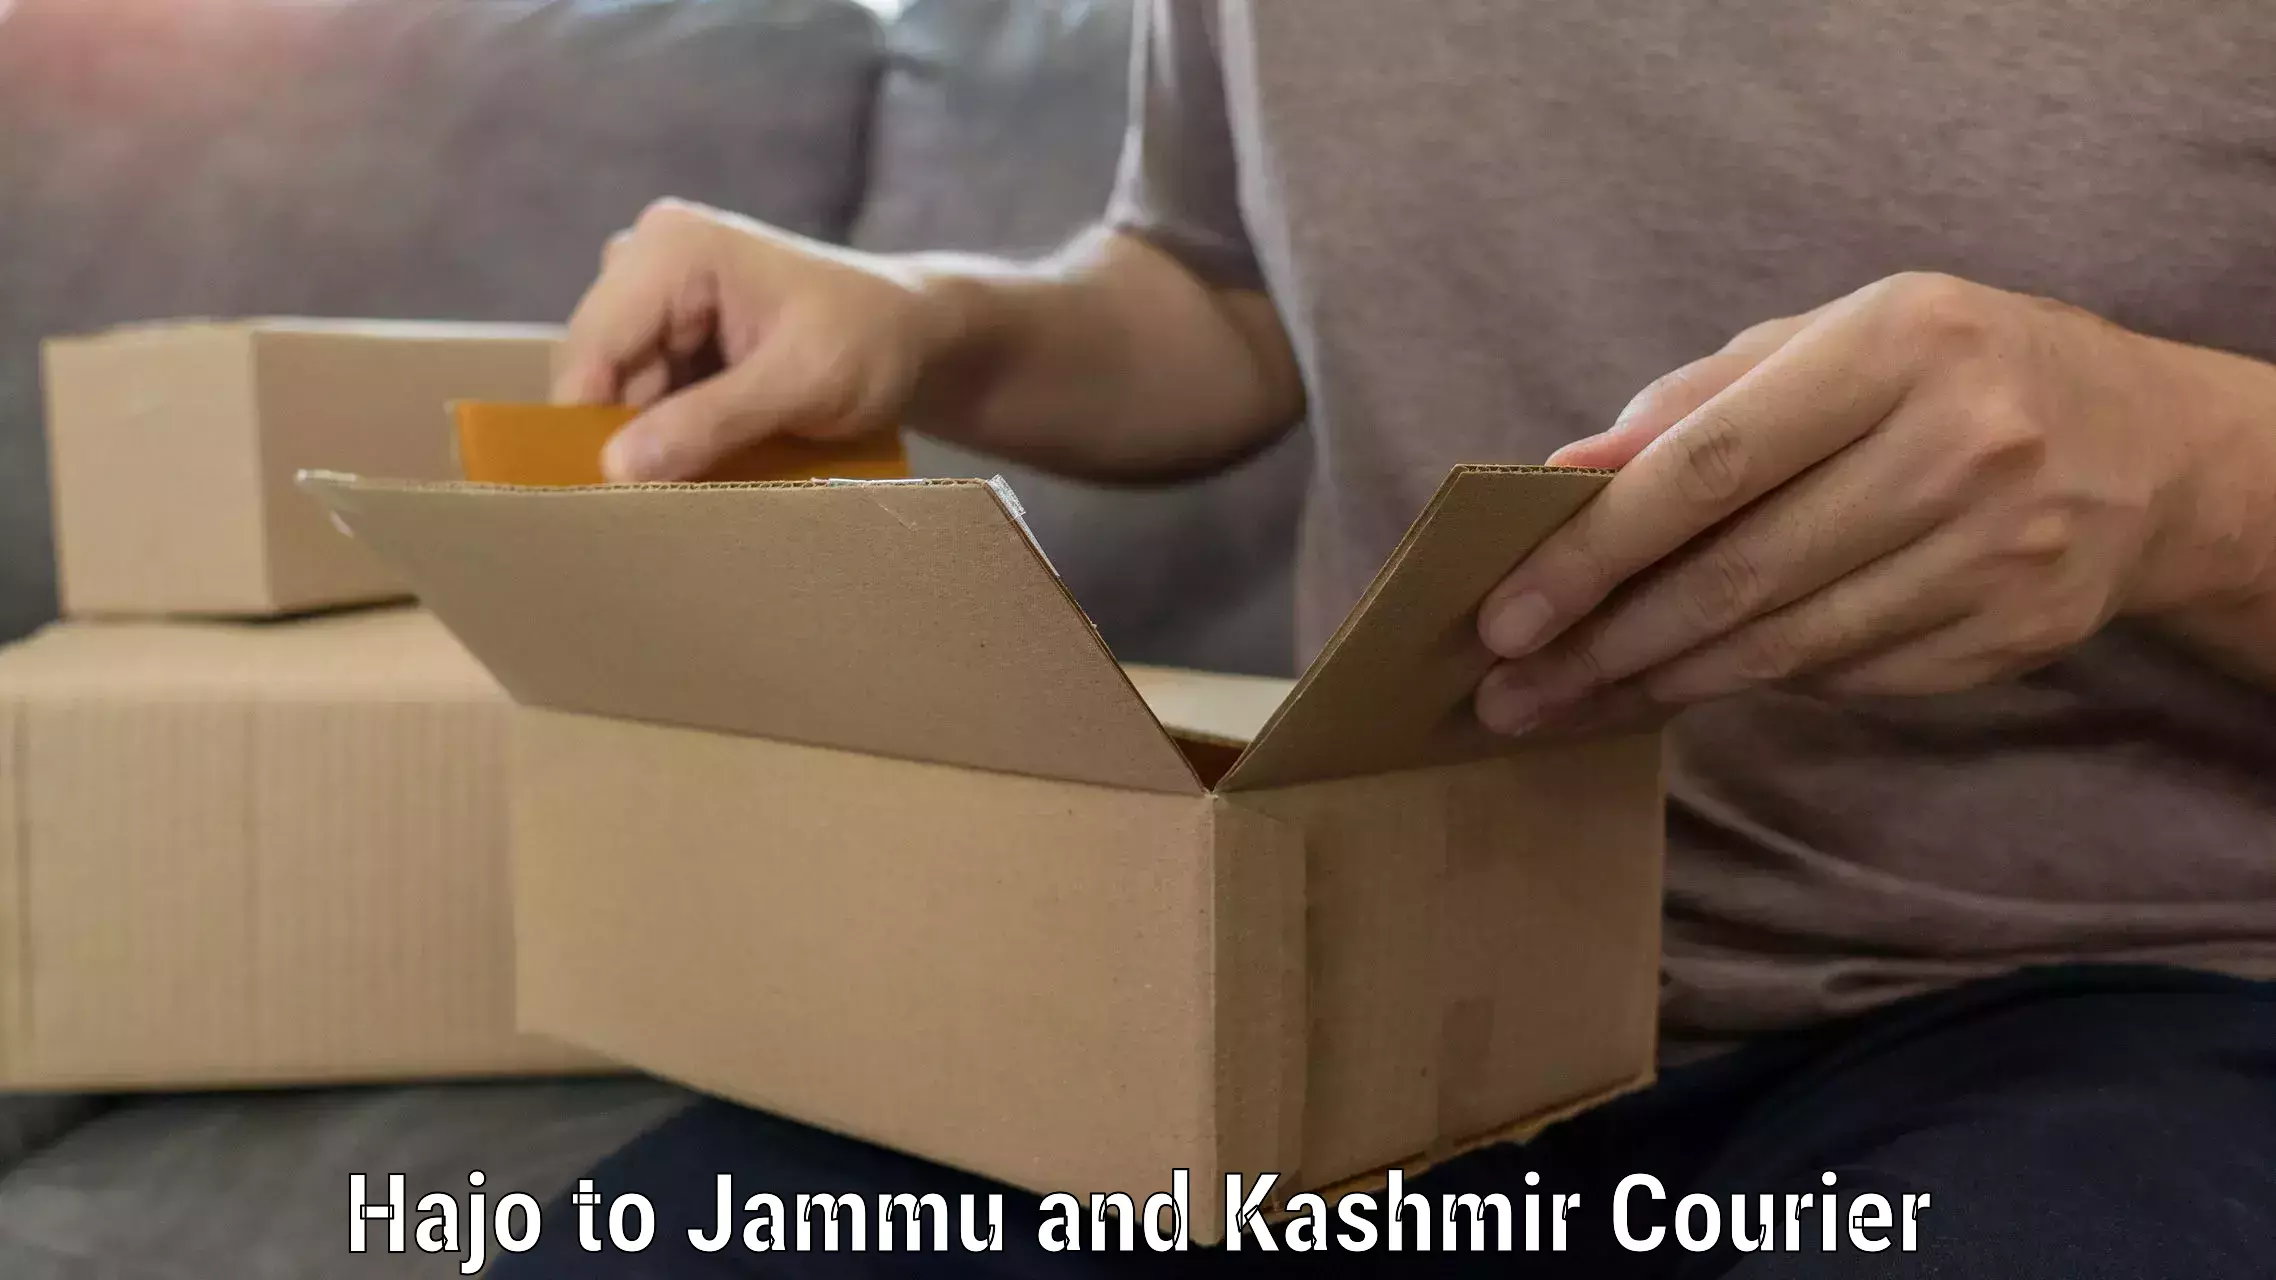 Furniture moving experts Hajo to Jammu and Kashmir